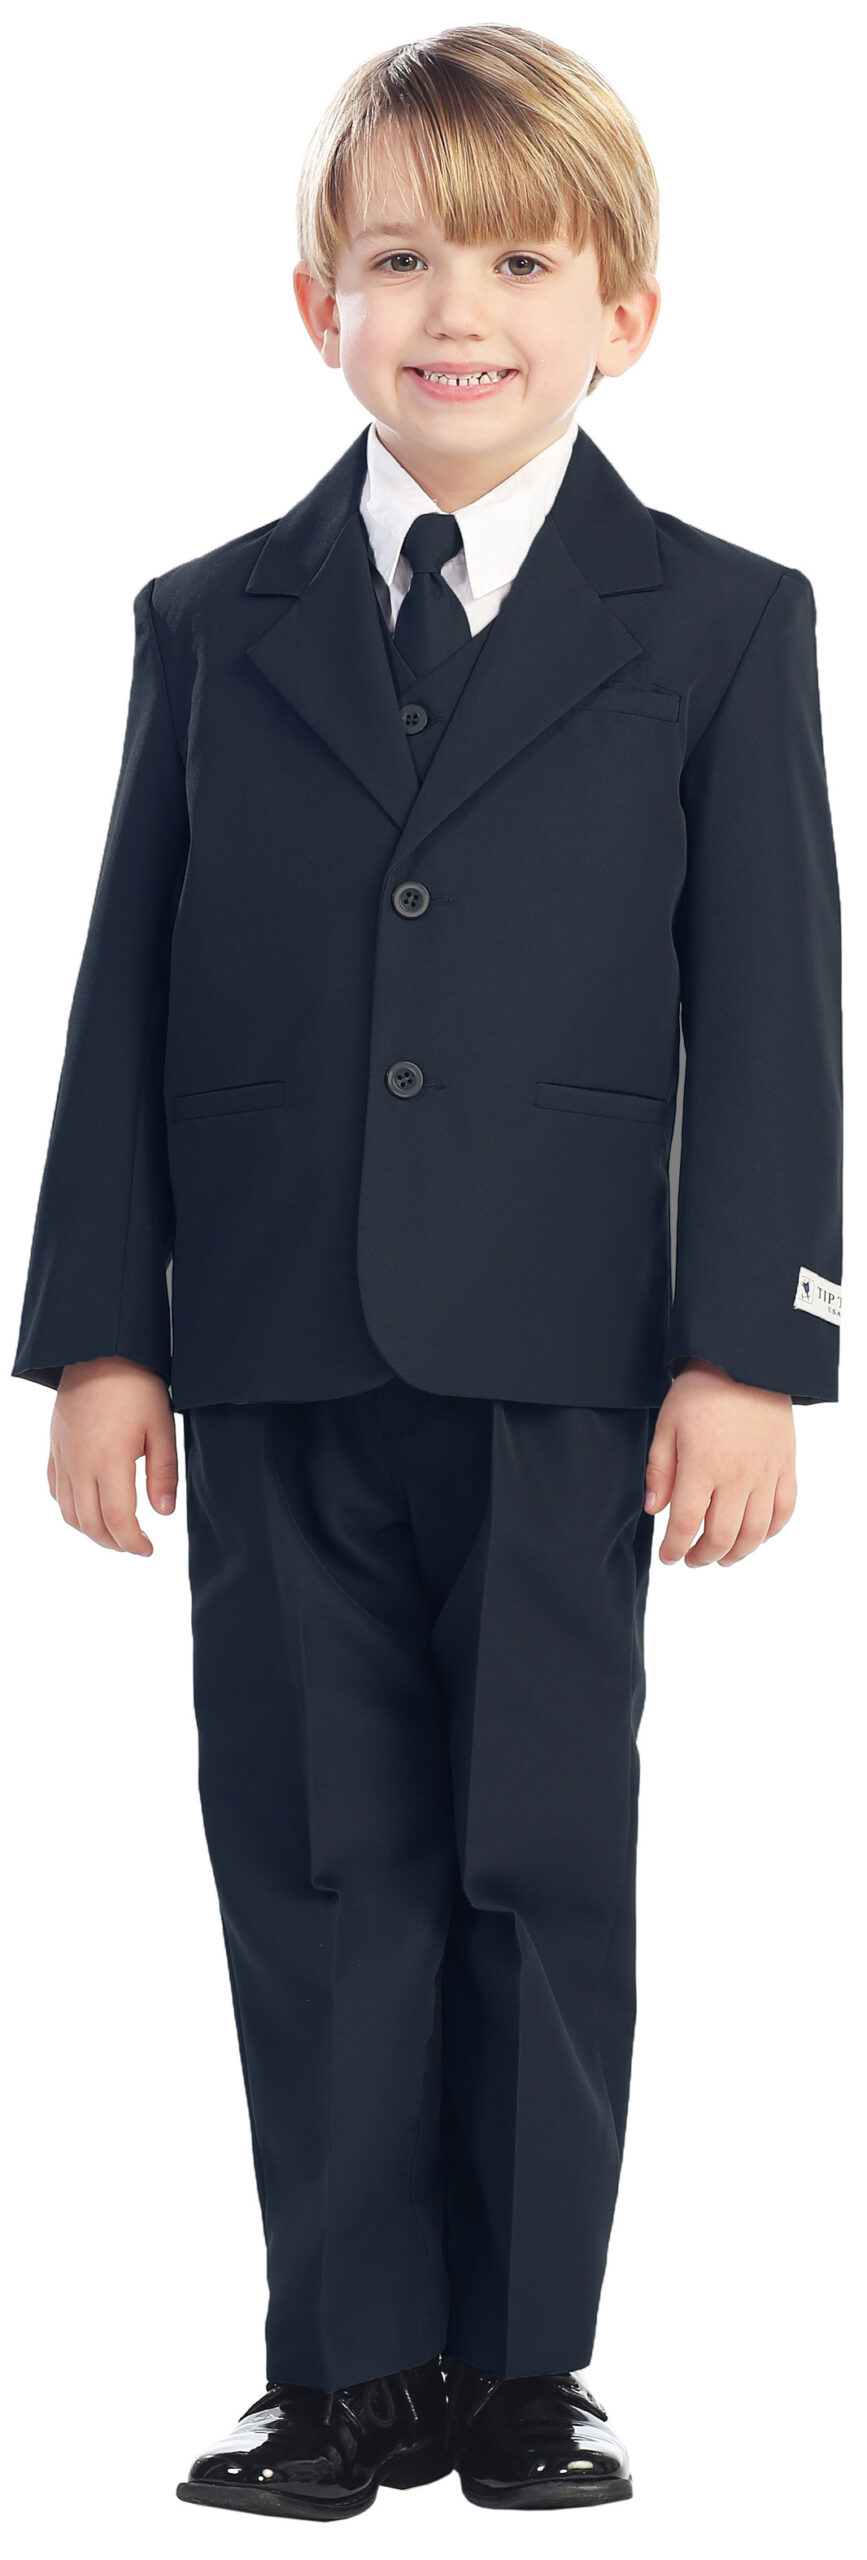 Avery Hill 5-Piece Boy's 2-Button Dress Suit Full-Back Vest - Navy Blue L (12 - 18 Months)